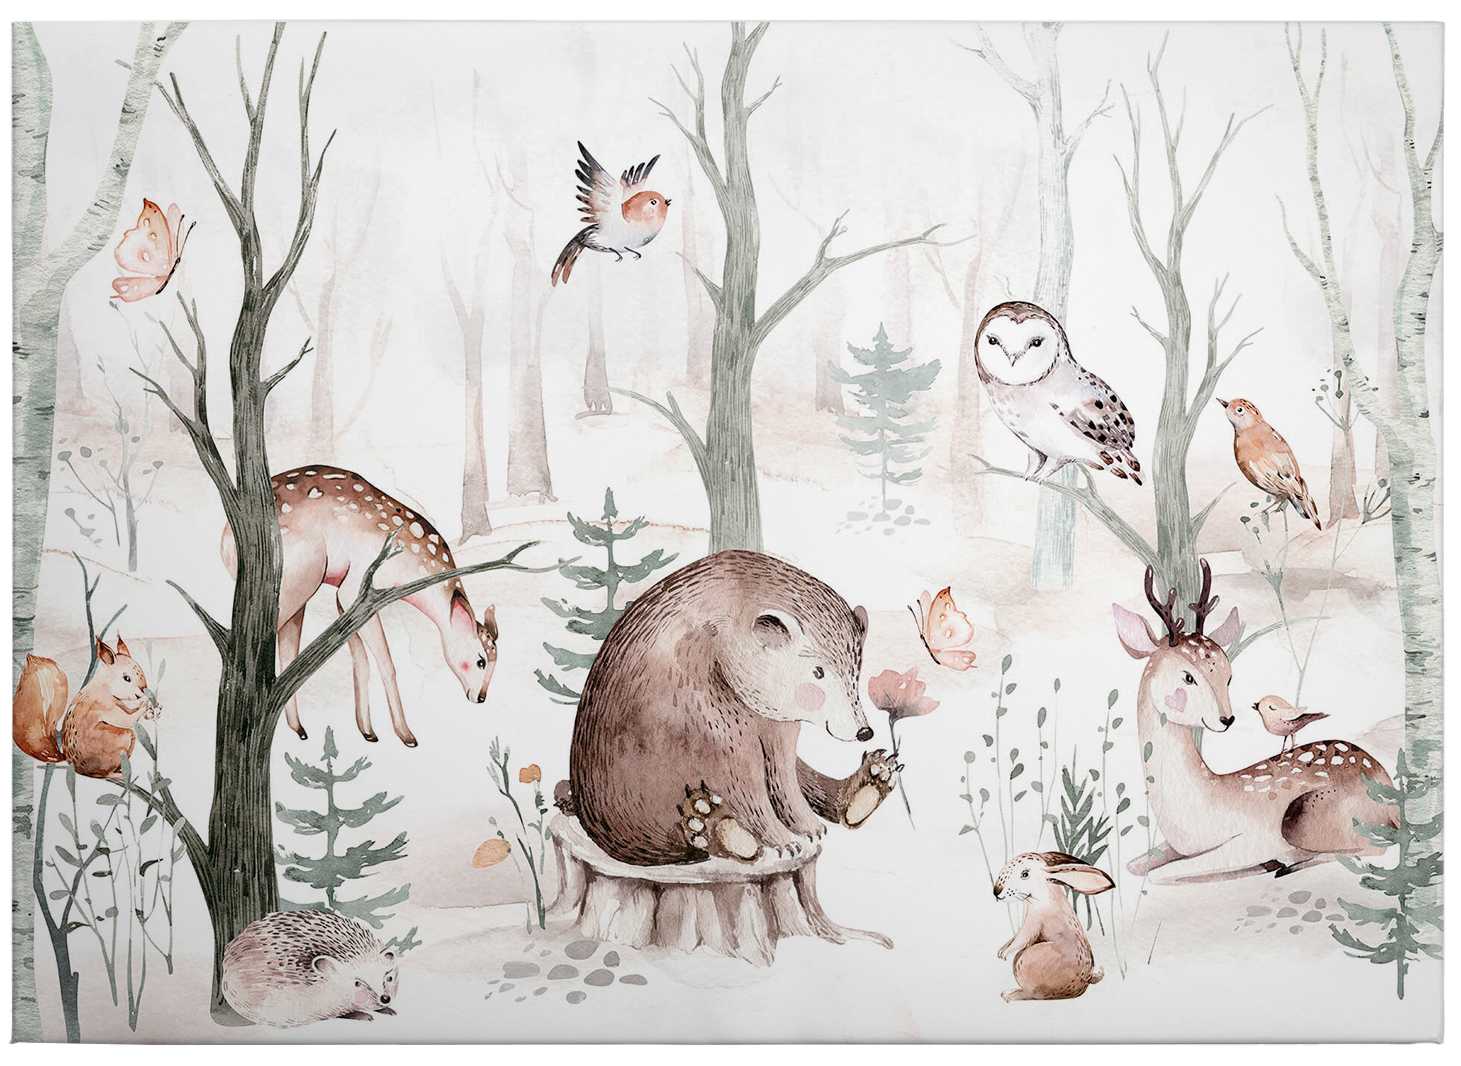             Cuadro Animales del bosque Acuarela Motivo niño by Kvilis - 0,70 m x 0,50 m
        